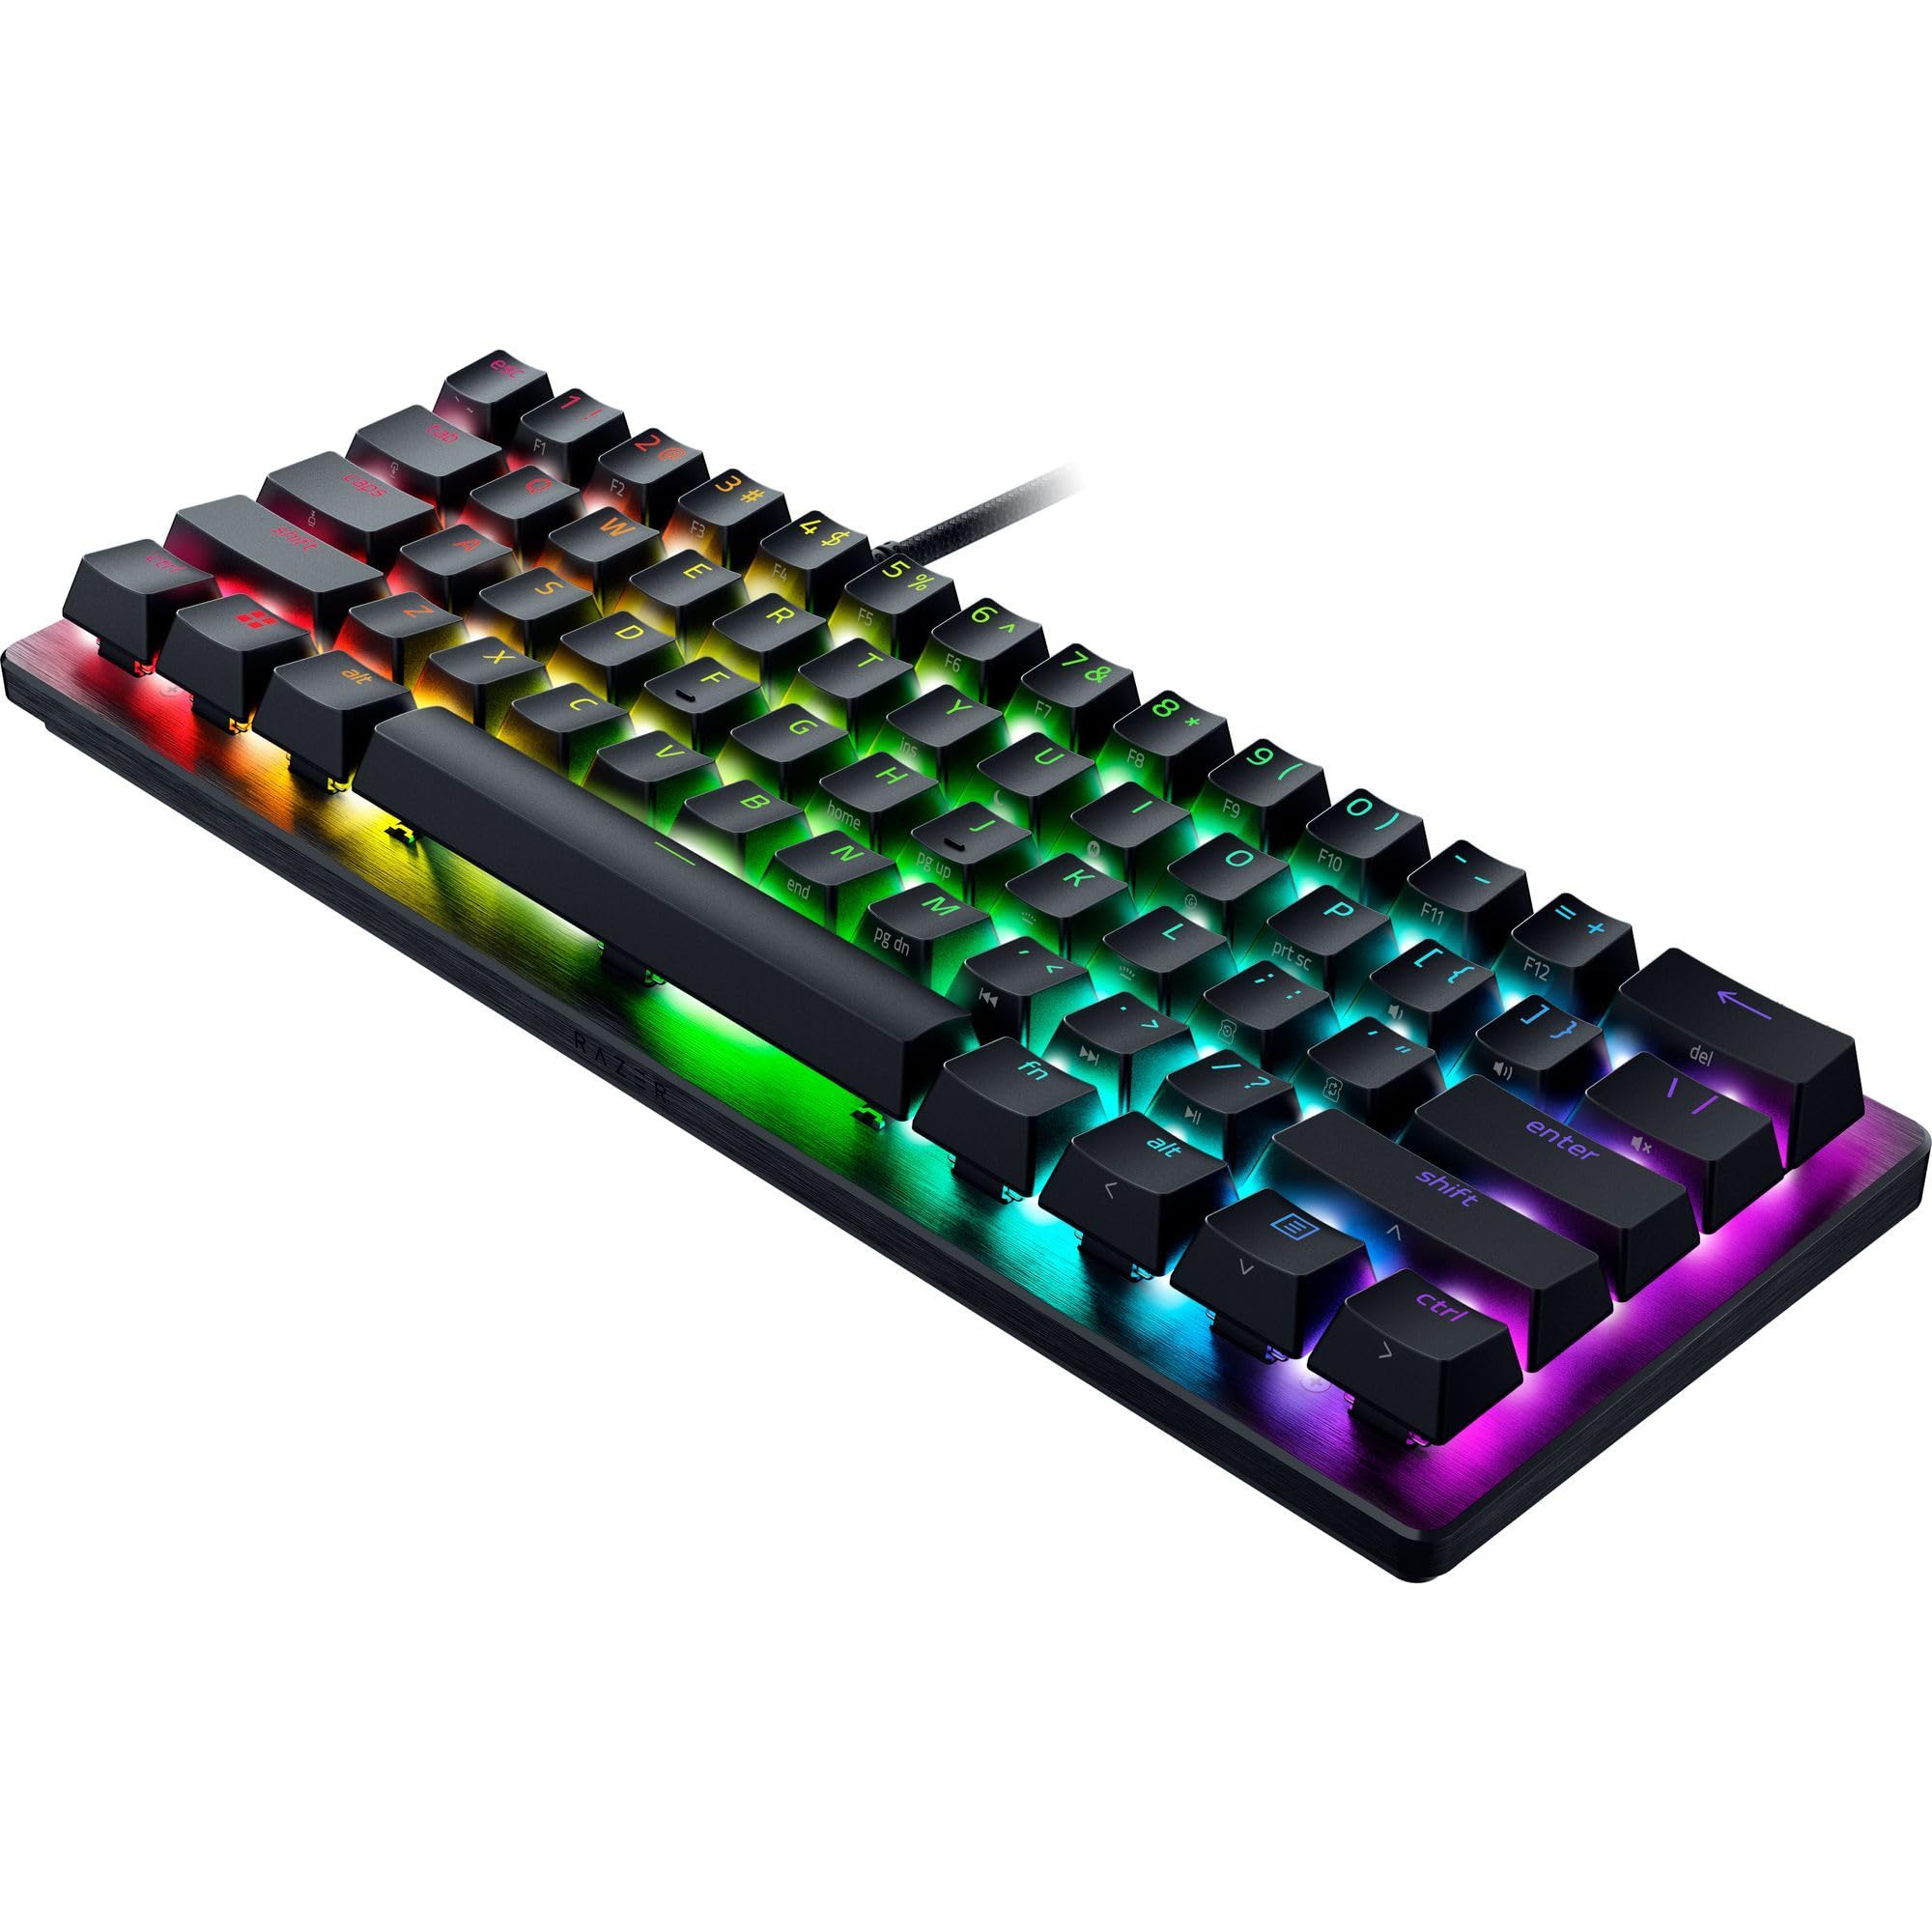 Razer Huntsman V3 Pro Mini 60% Gaming Keyboard: Analog Optical Switches w/Rapid Trigger & Adjustable Actuation - Onboard Adjustments - Dual-Purpose Mod Keys - Doubleshot PBT Keycaps - Black